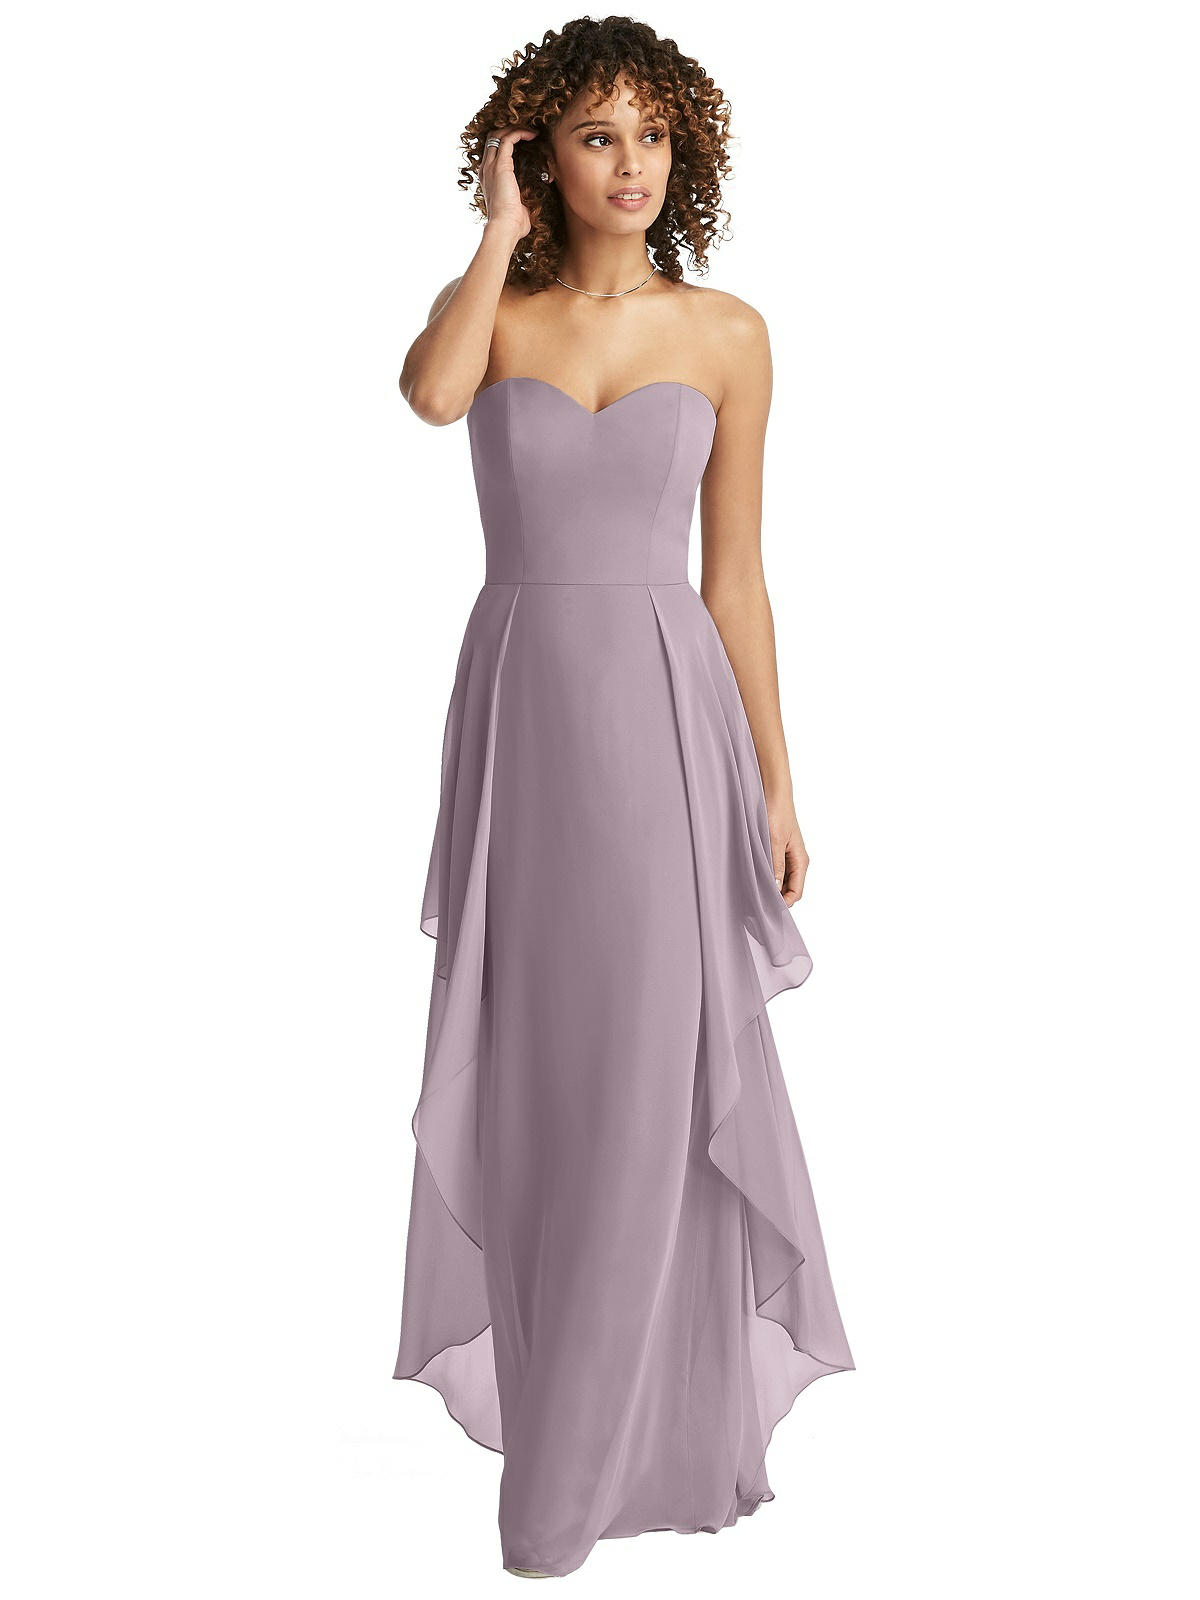 long purple bridesmaid dress